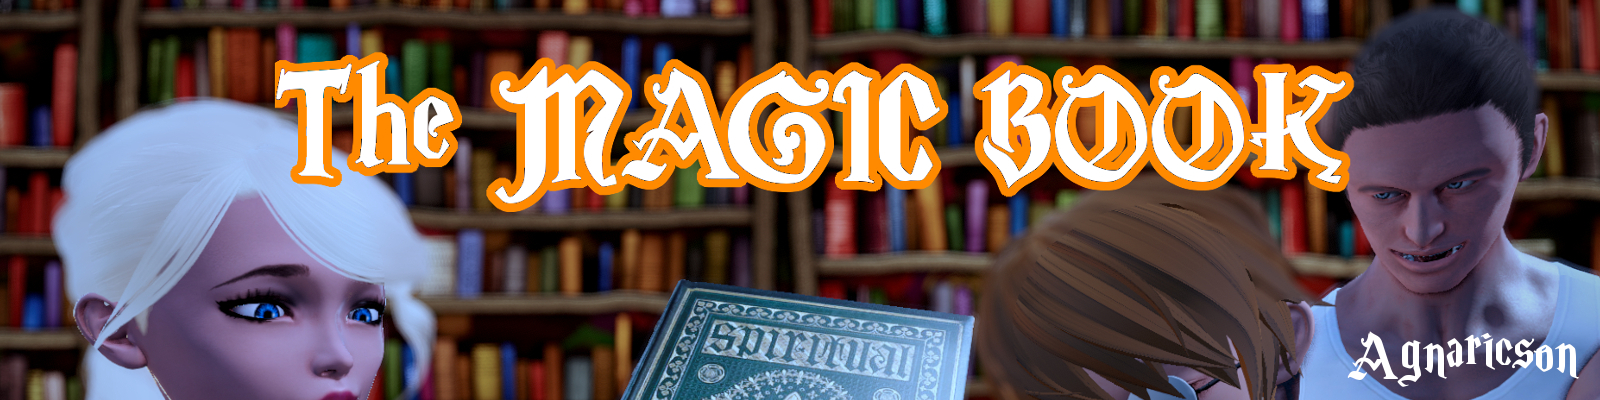 The Magic Book main image